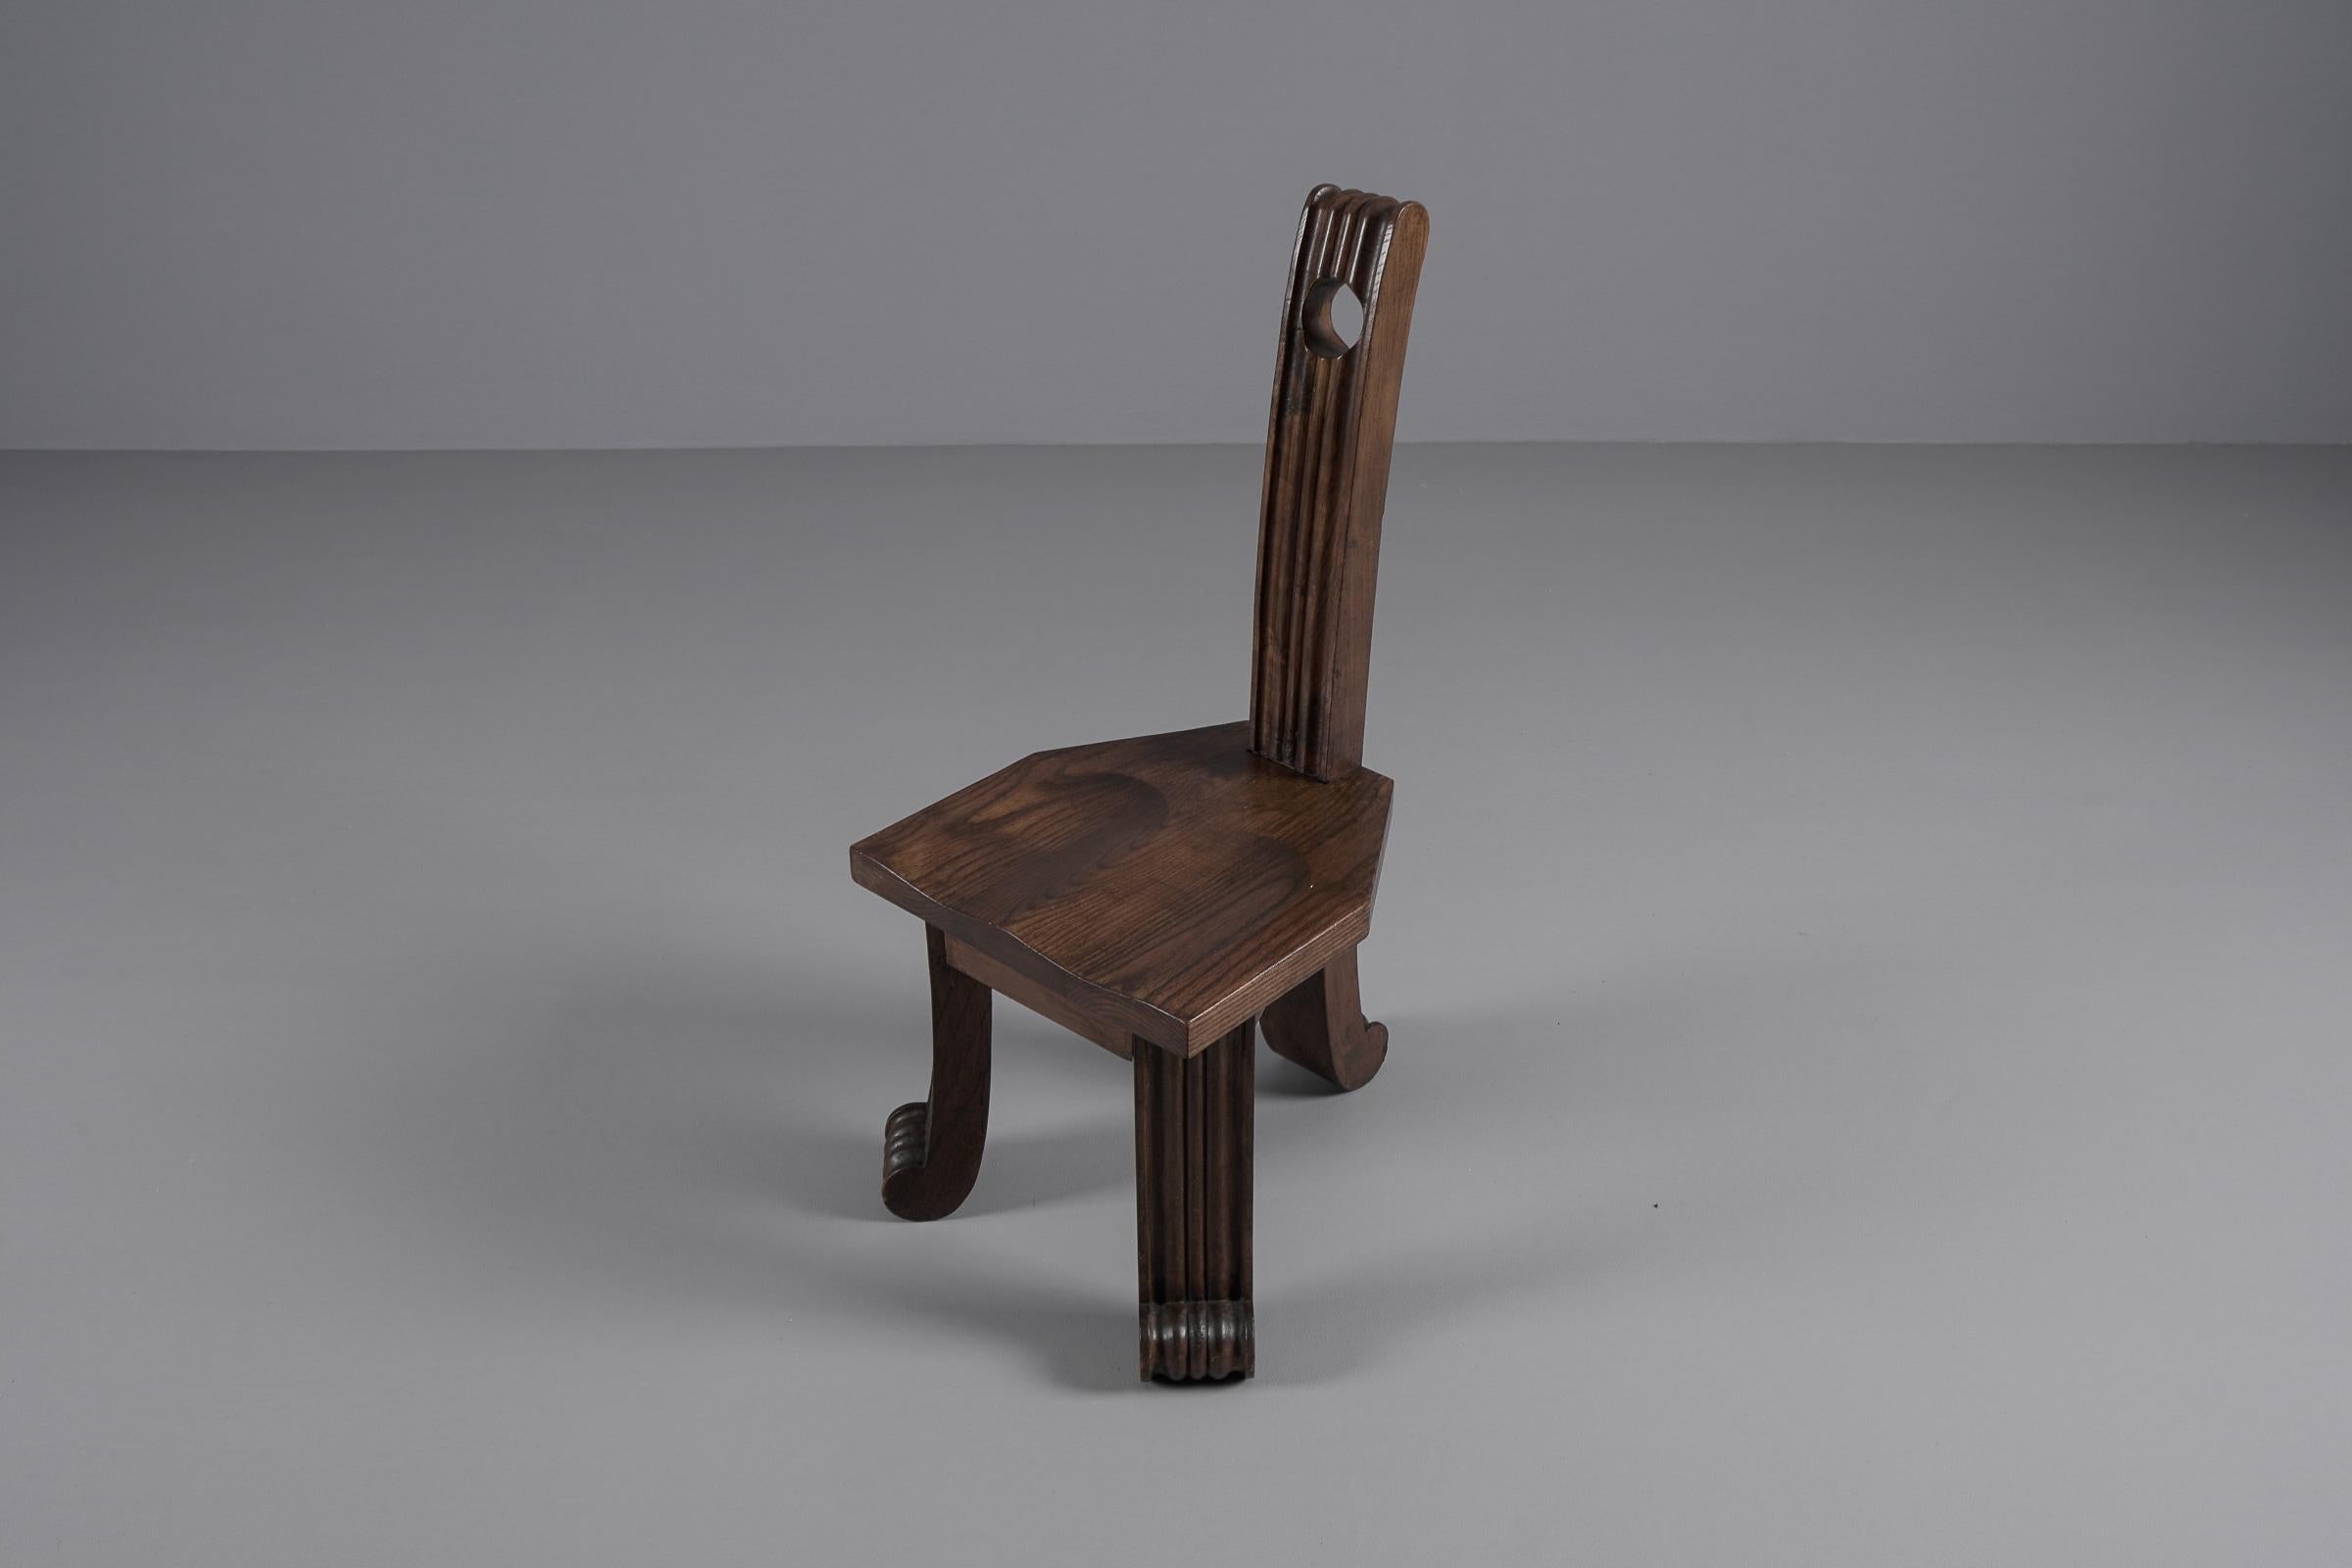 Wood Primitive Rustic Britalist Modern Sculptured Chair, 1940s Europe